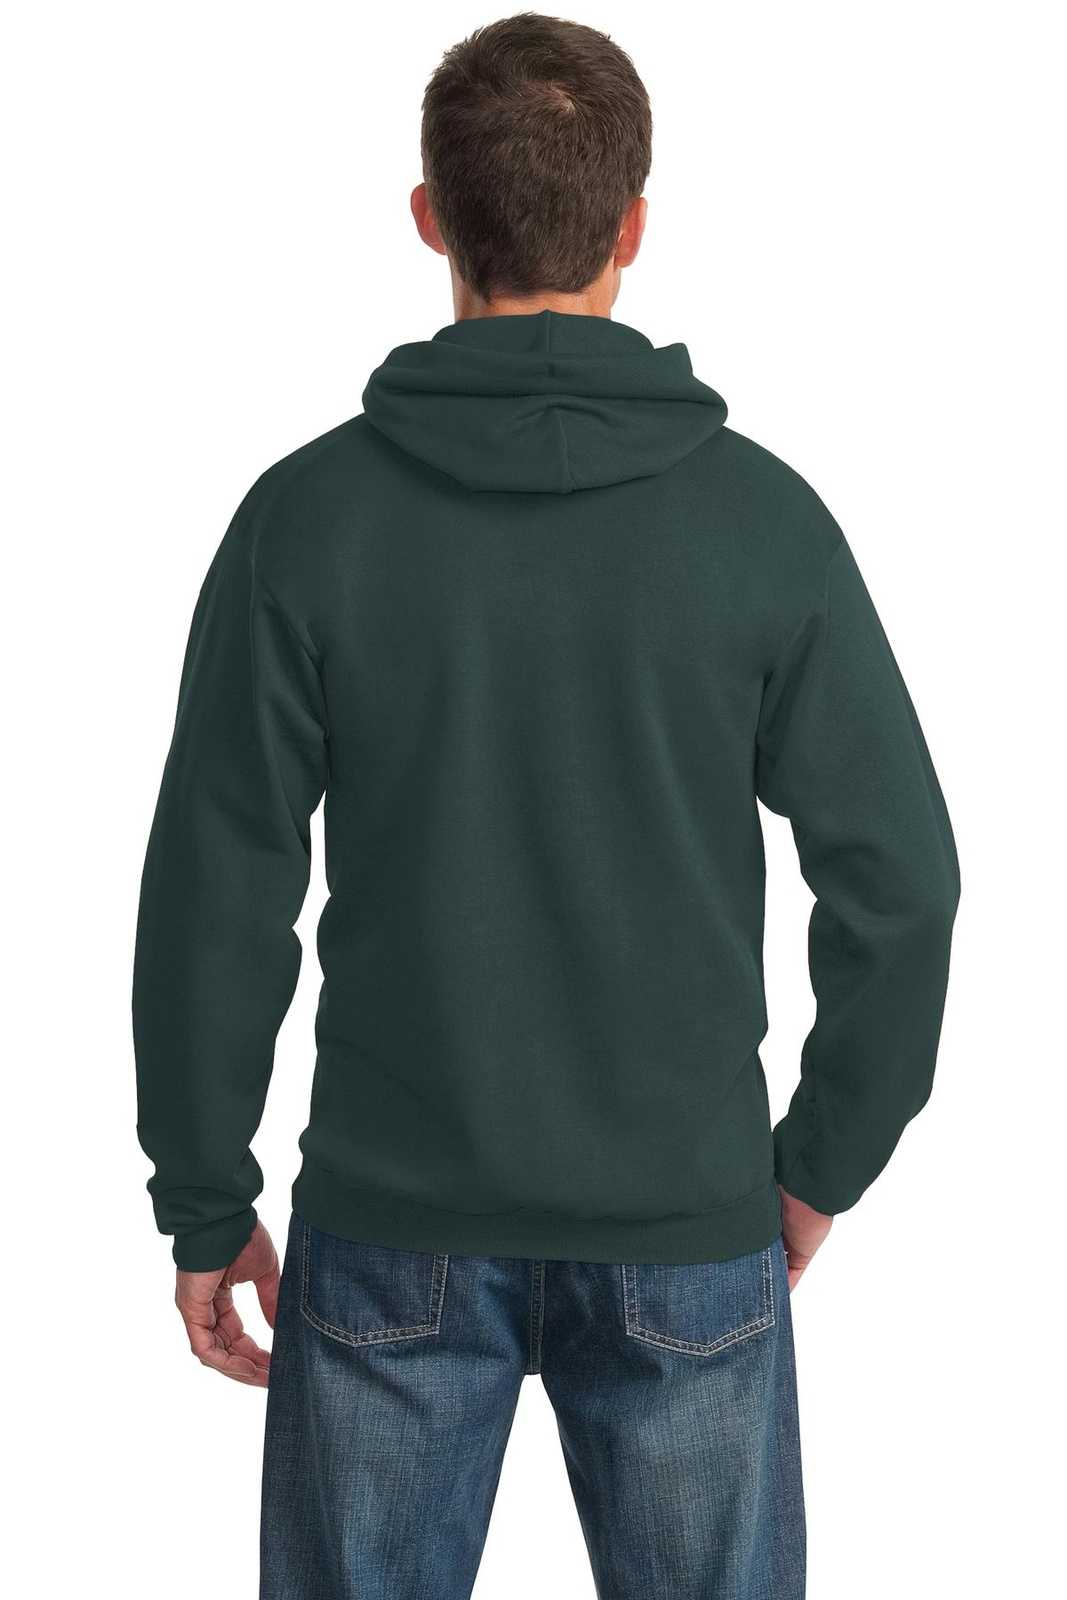 Port &amp; Company PC90H Essential Fleece Pullover Hooded Sweatshirt - Dark Green - HIT a Double - 2